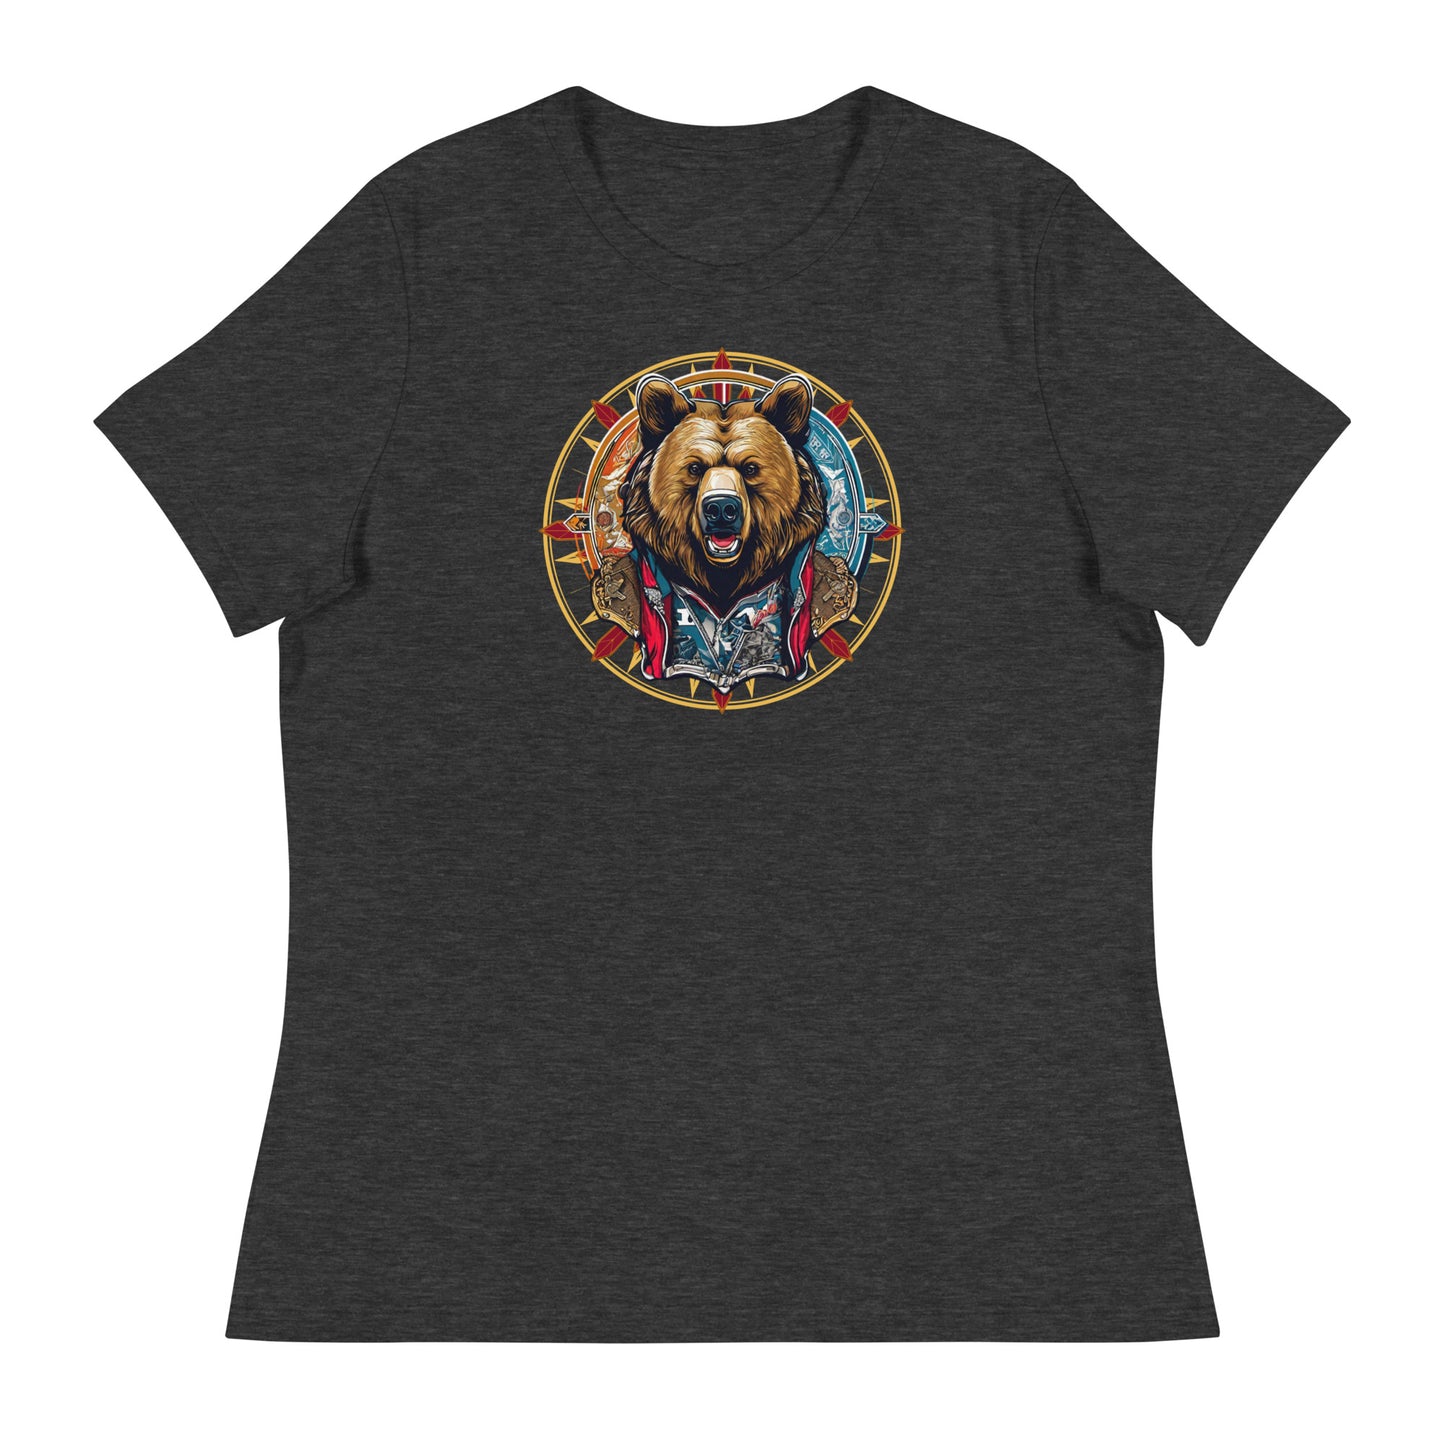 Bear Emblem Women's Graphic T-Shirt Dark Grey Heather